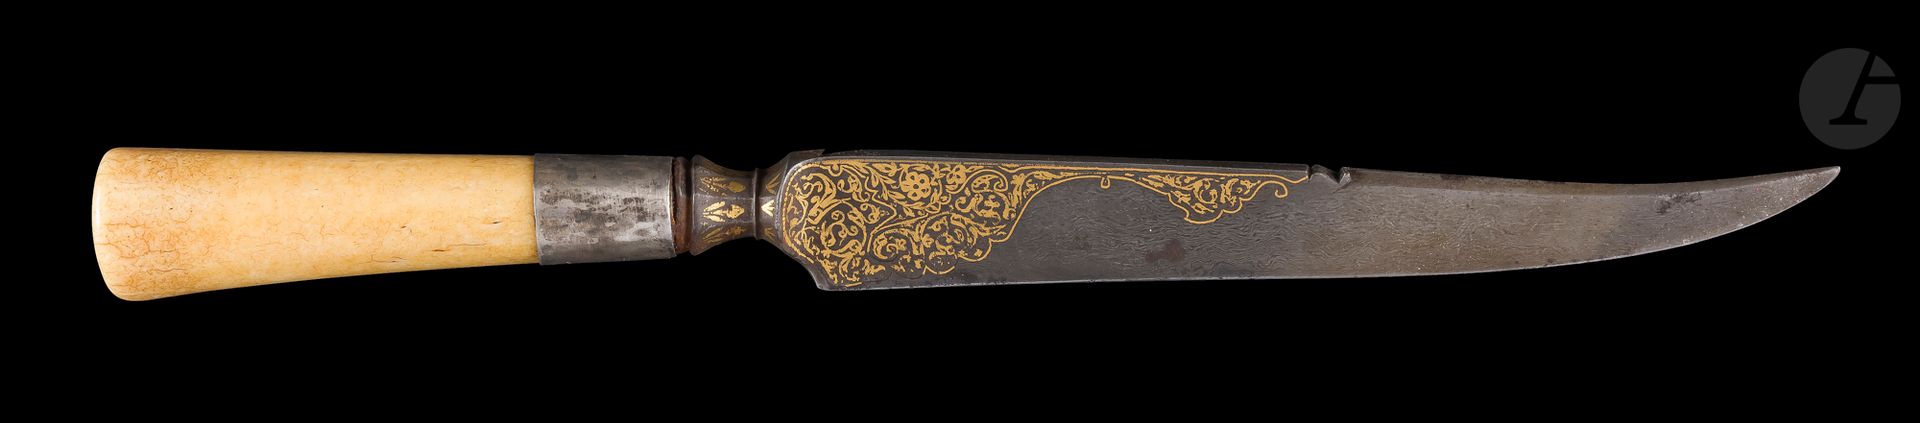 Null Kard dagger, Ottoman Empire, early 19th century
Single-edged damascus steel&hellip;